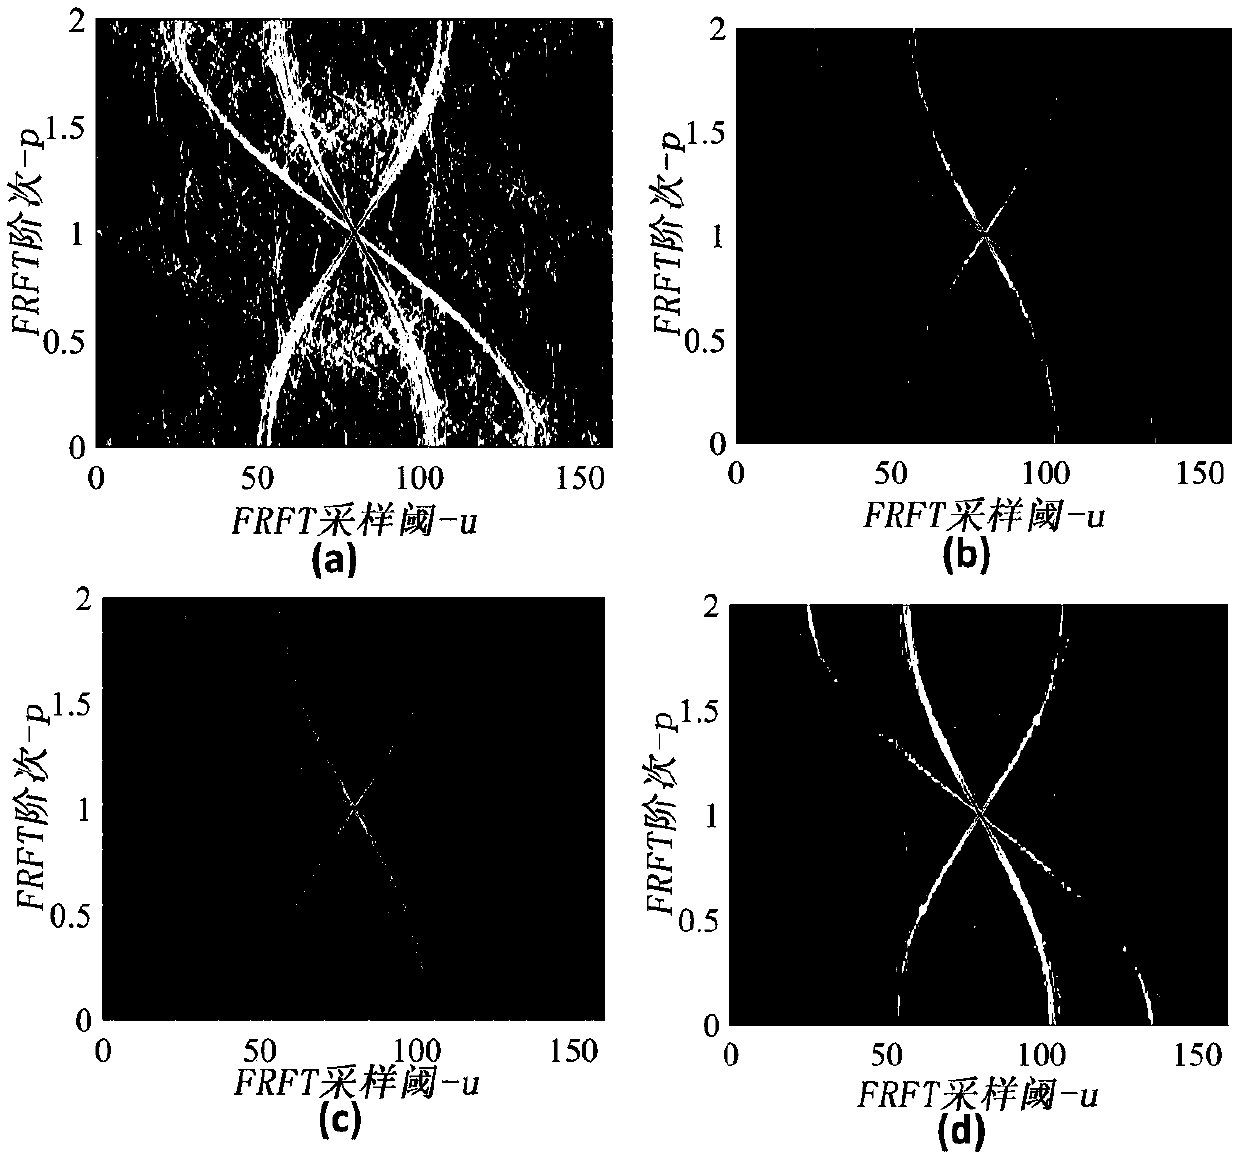 Laser radar weak signal extraction and decomposition method based on fractional order Fourier transformation